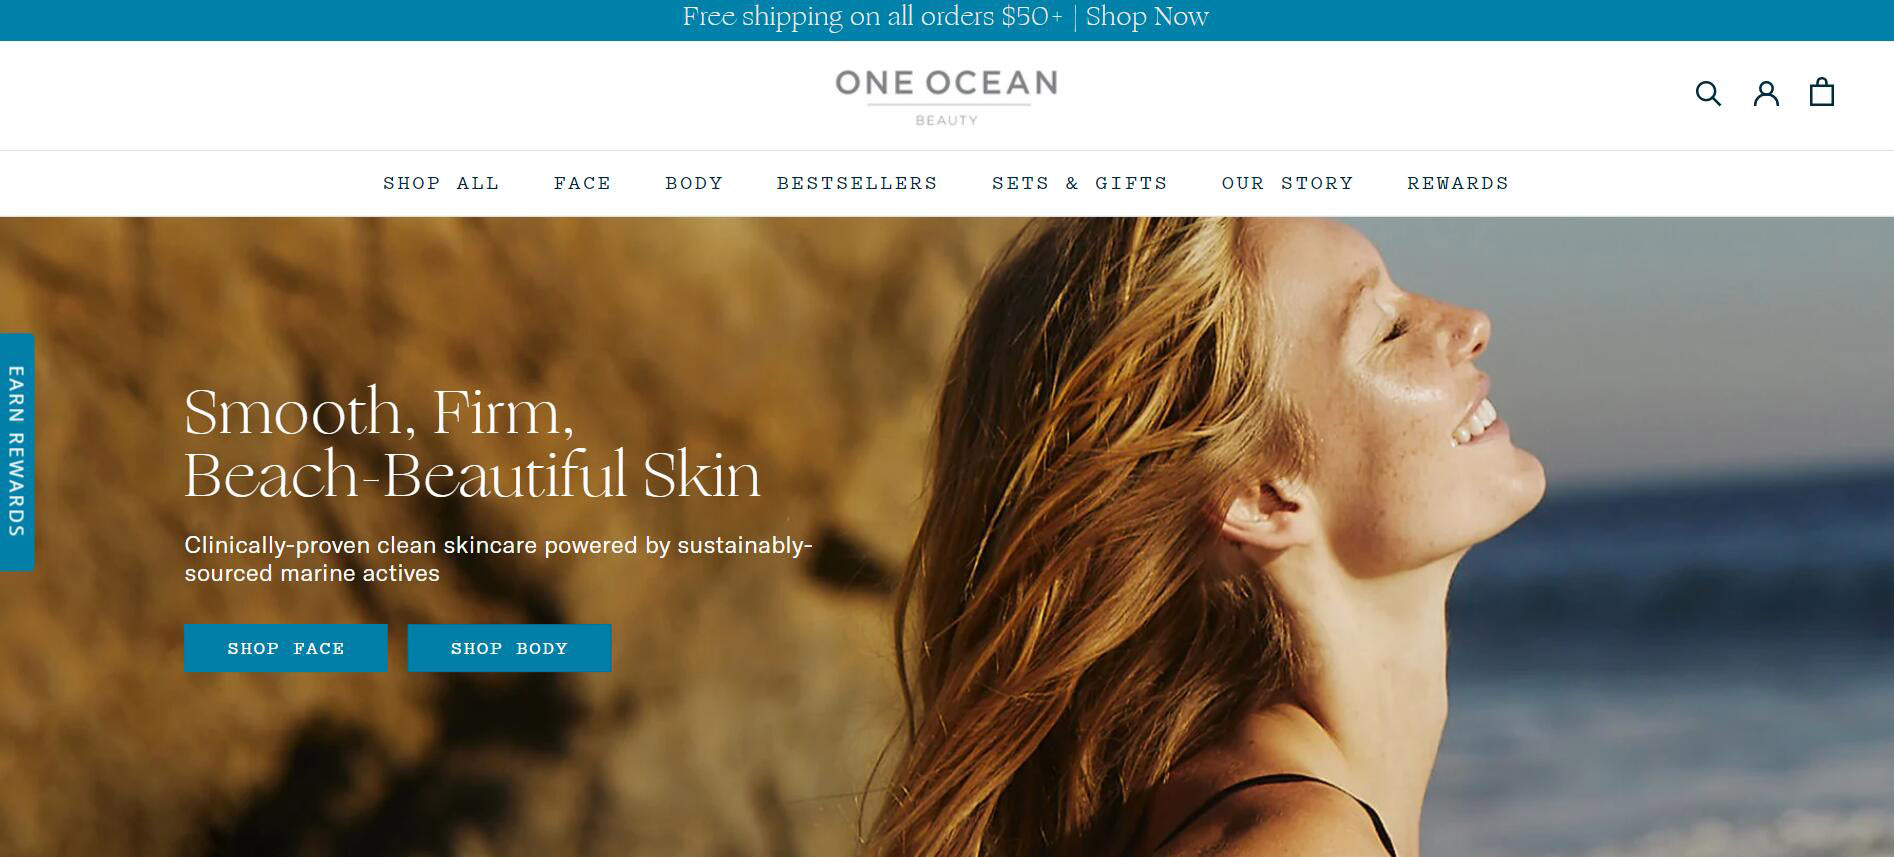 One Ocean Beauty Affiliate Program